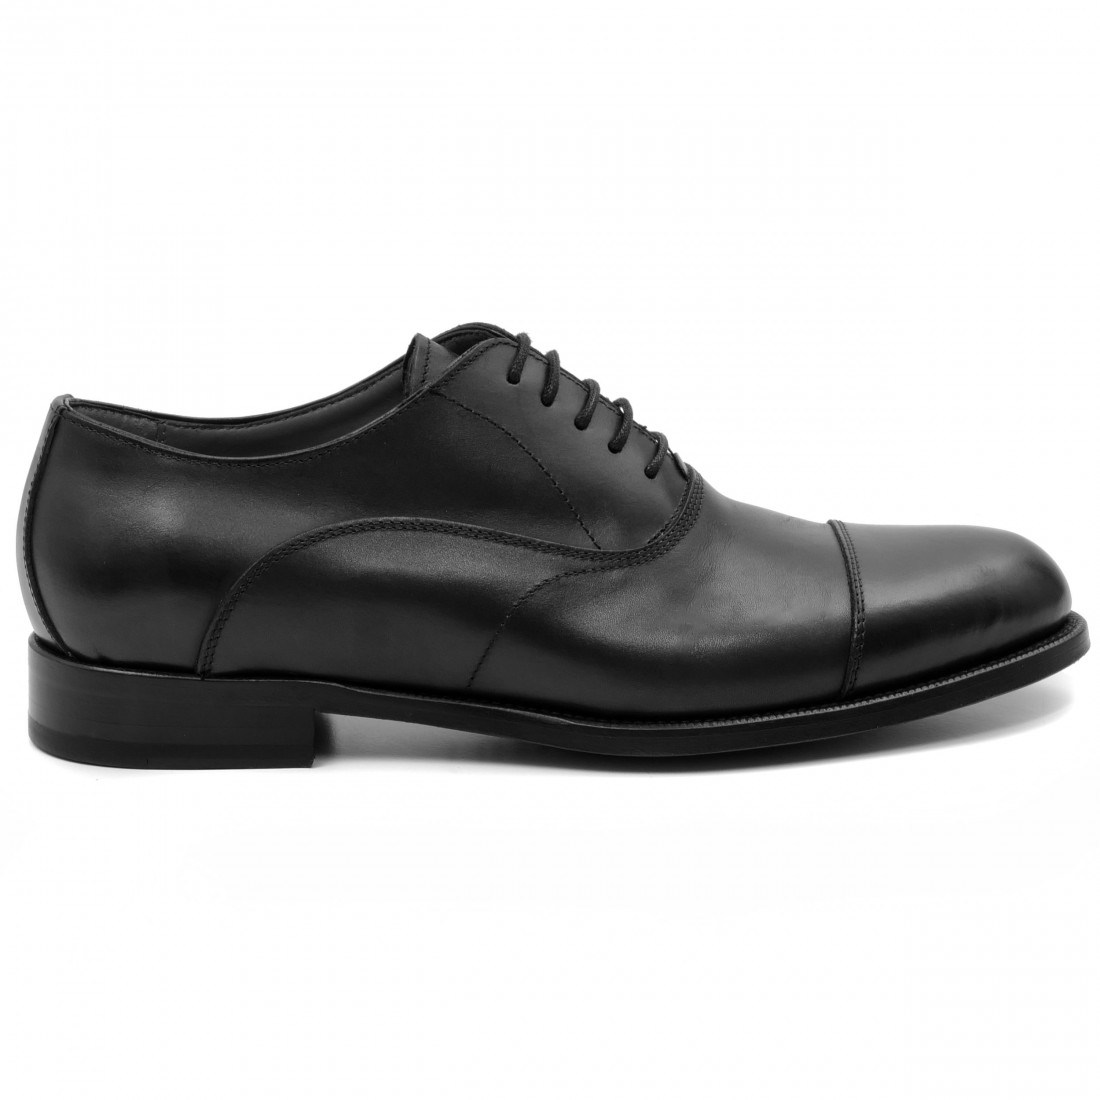 Calpierre men's oxford shoe in black leather